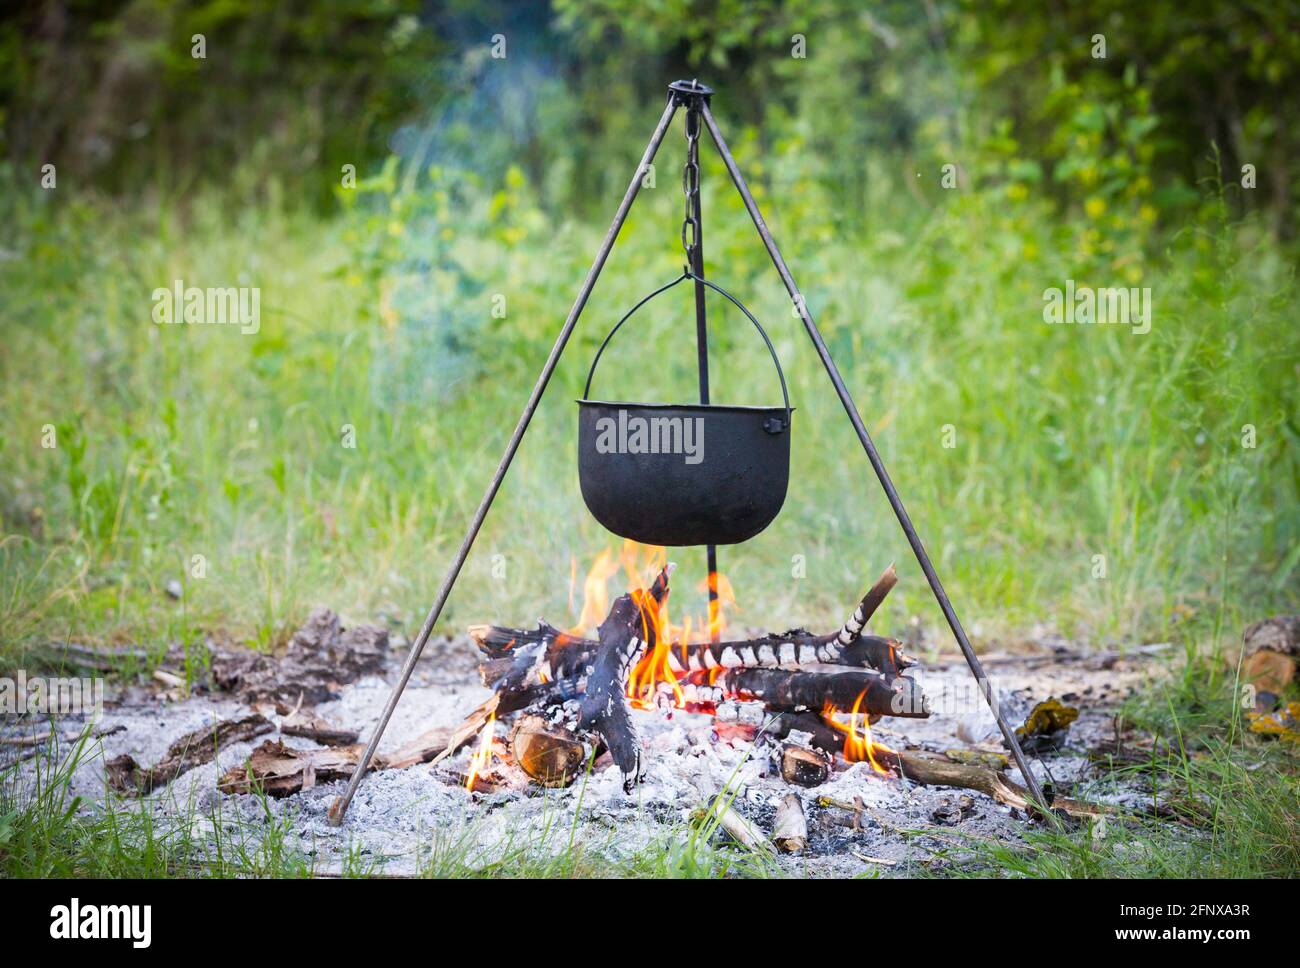 https://c8.alamy.com/comp/2FNXA3R/tourist-kettle-over-camp-fire-in-spring-forest-2FNXA3R.jpg